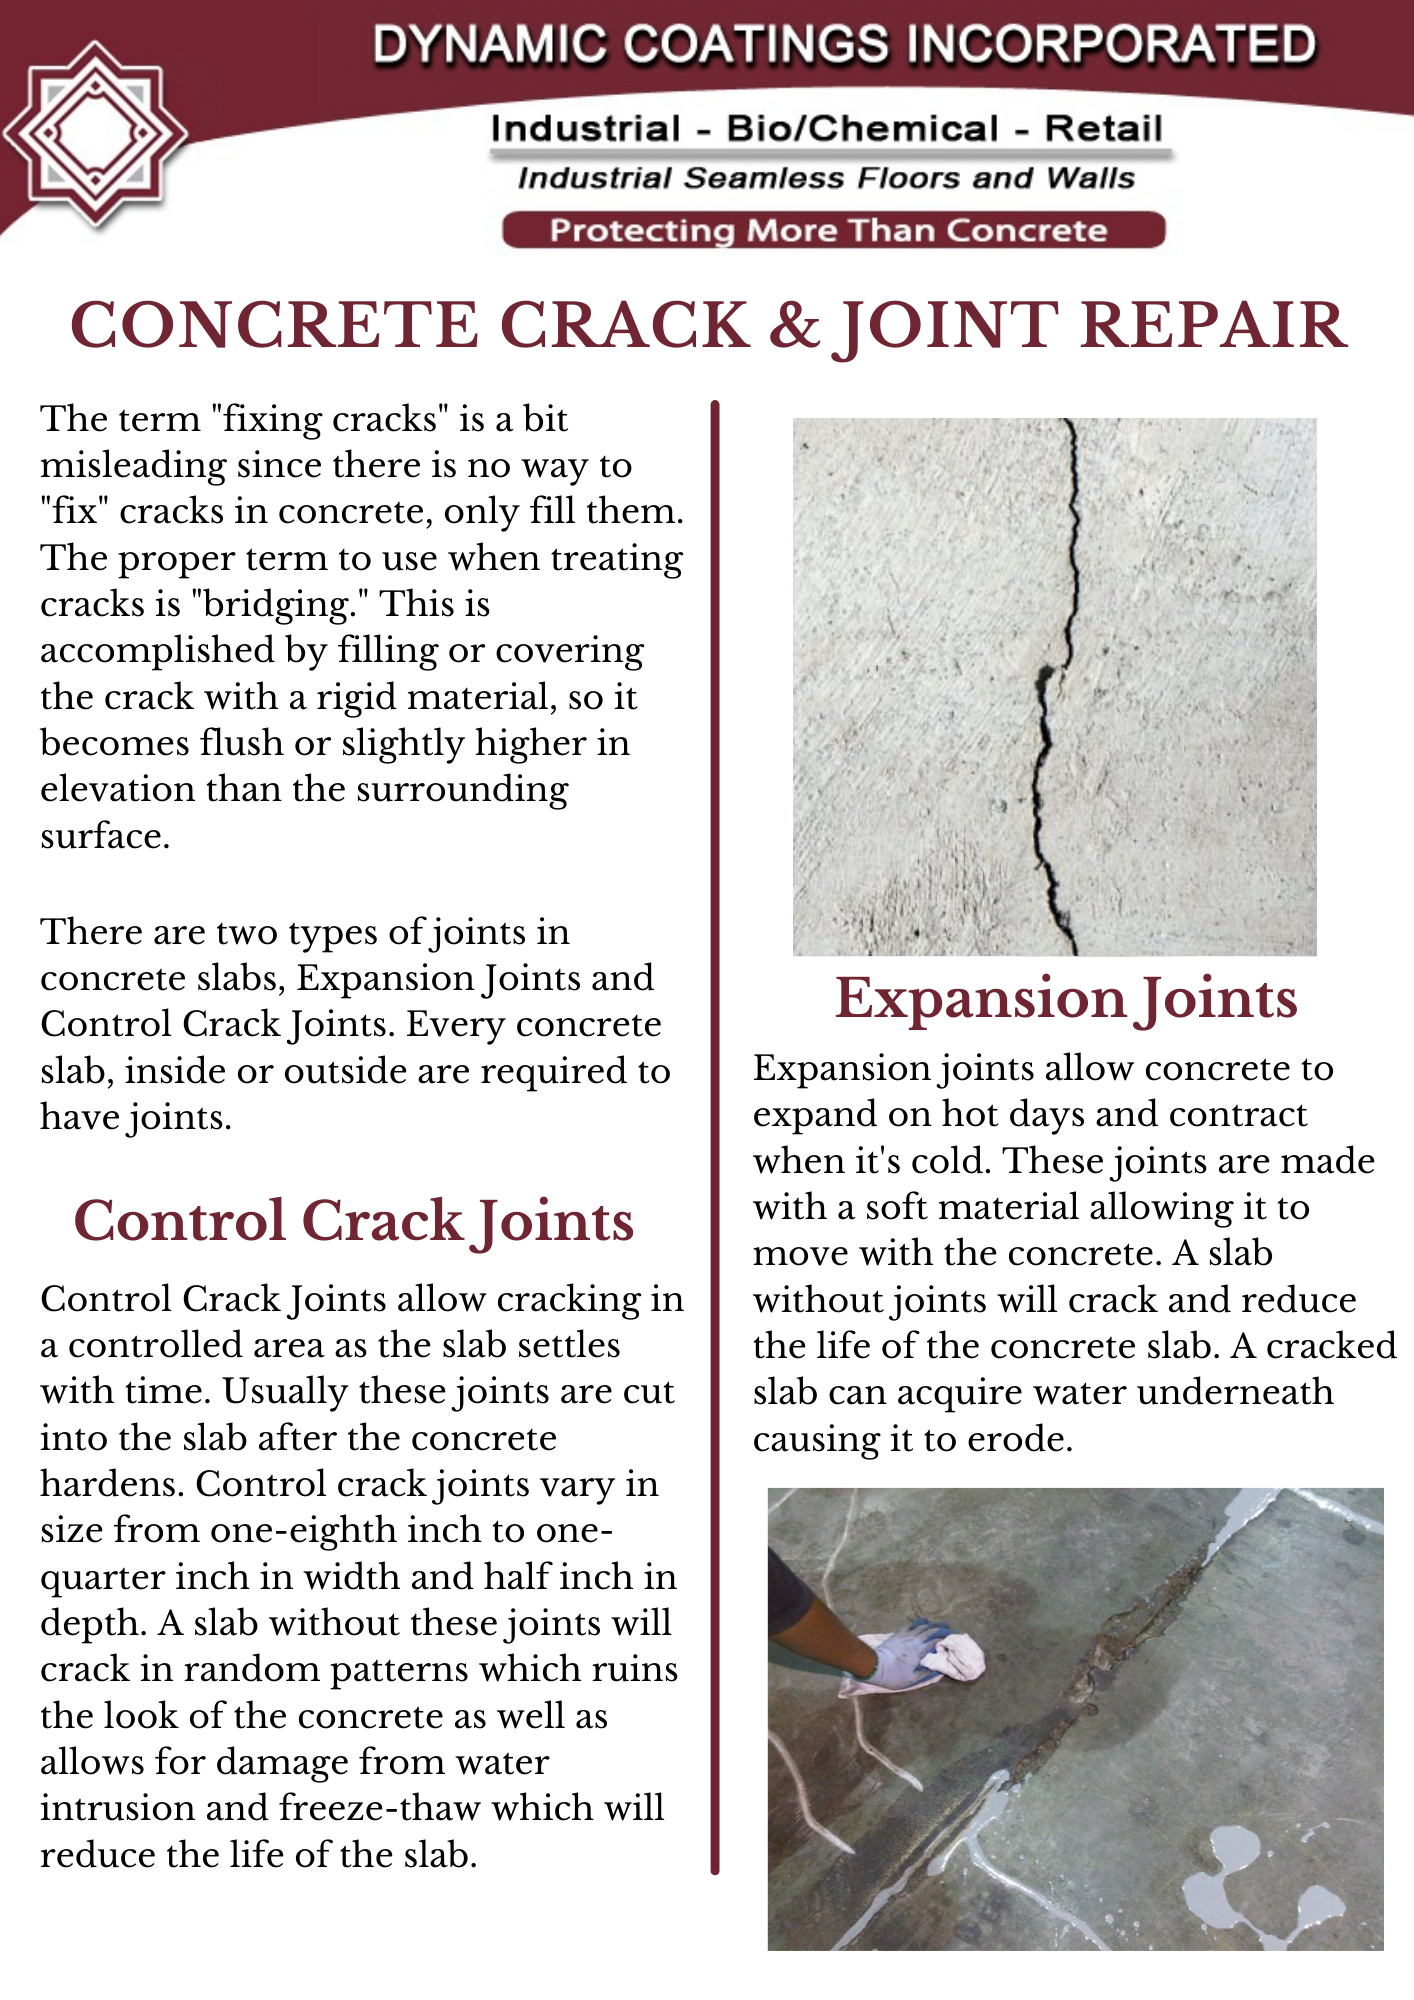 http://dciflooring.com/wp-content/uploads/2022/02/Concrete-Crack-Joint-Repair-PG-1.png